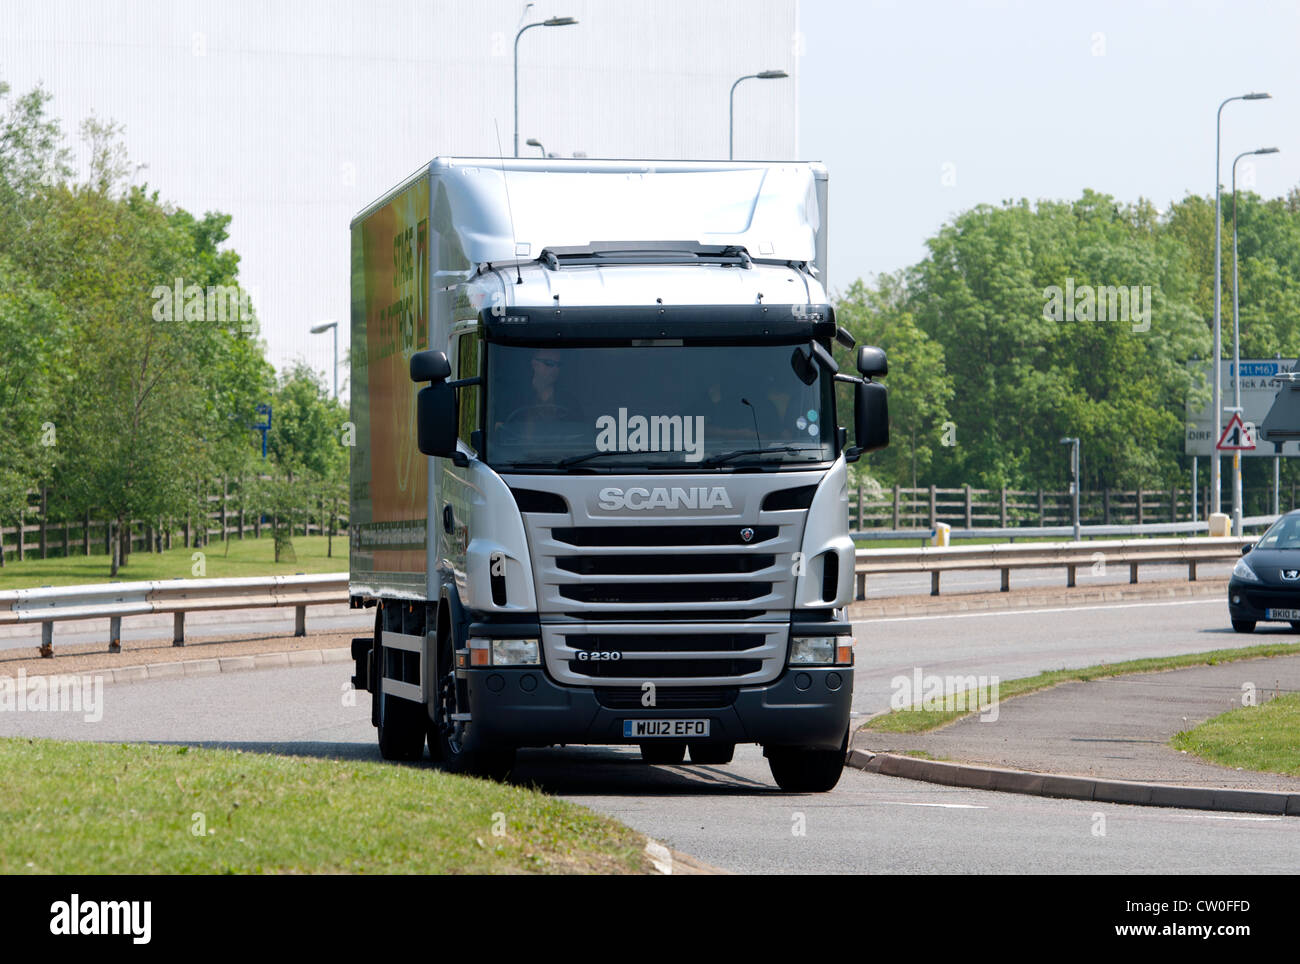 Scania lorry at DIRFT, Northamptonshire, UK Stock Photo